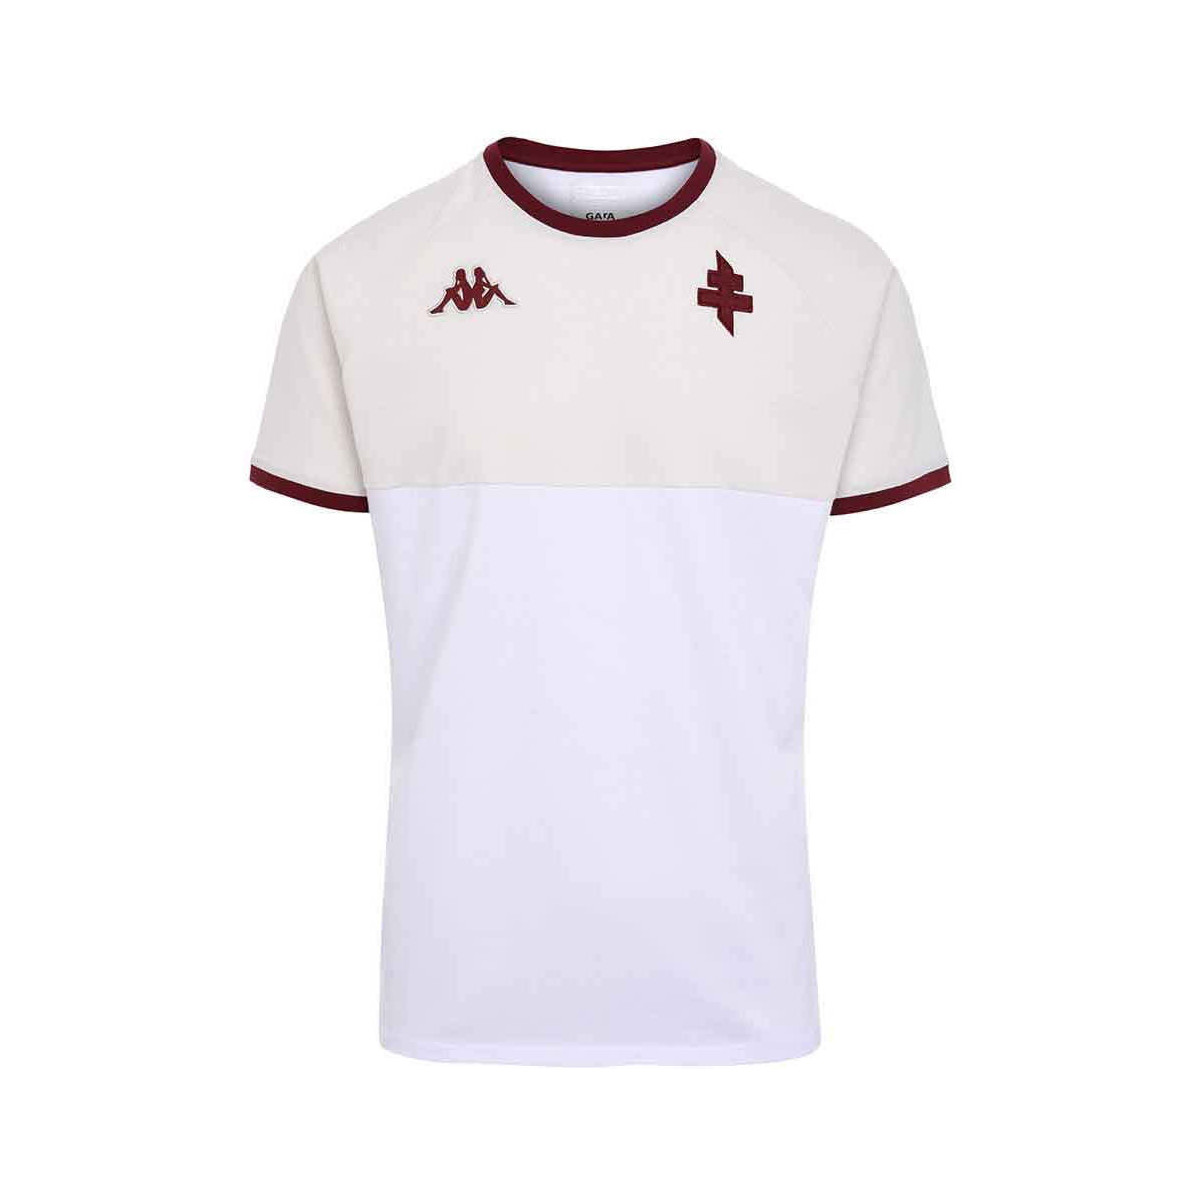 Kappa Blanc T-shirt Ayba 6 FC Metz 22/23 ZlW2RA5l